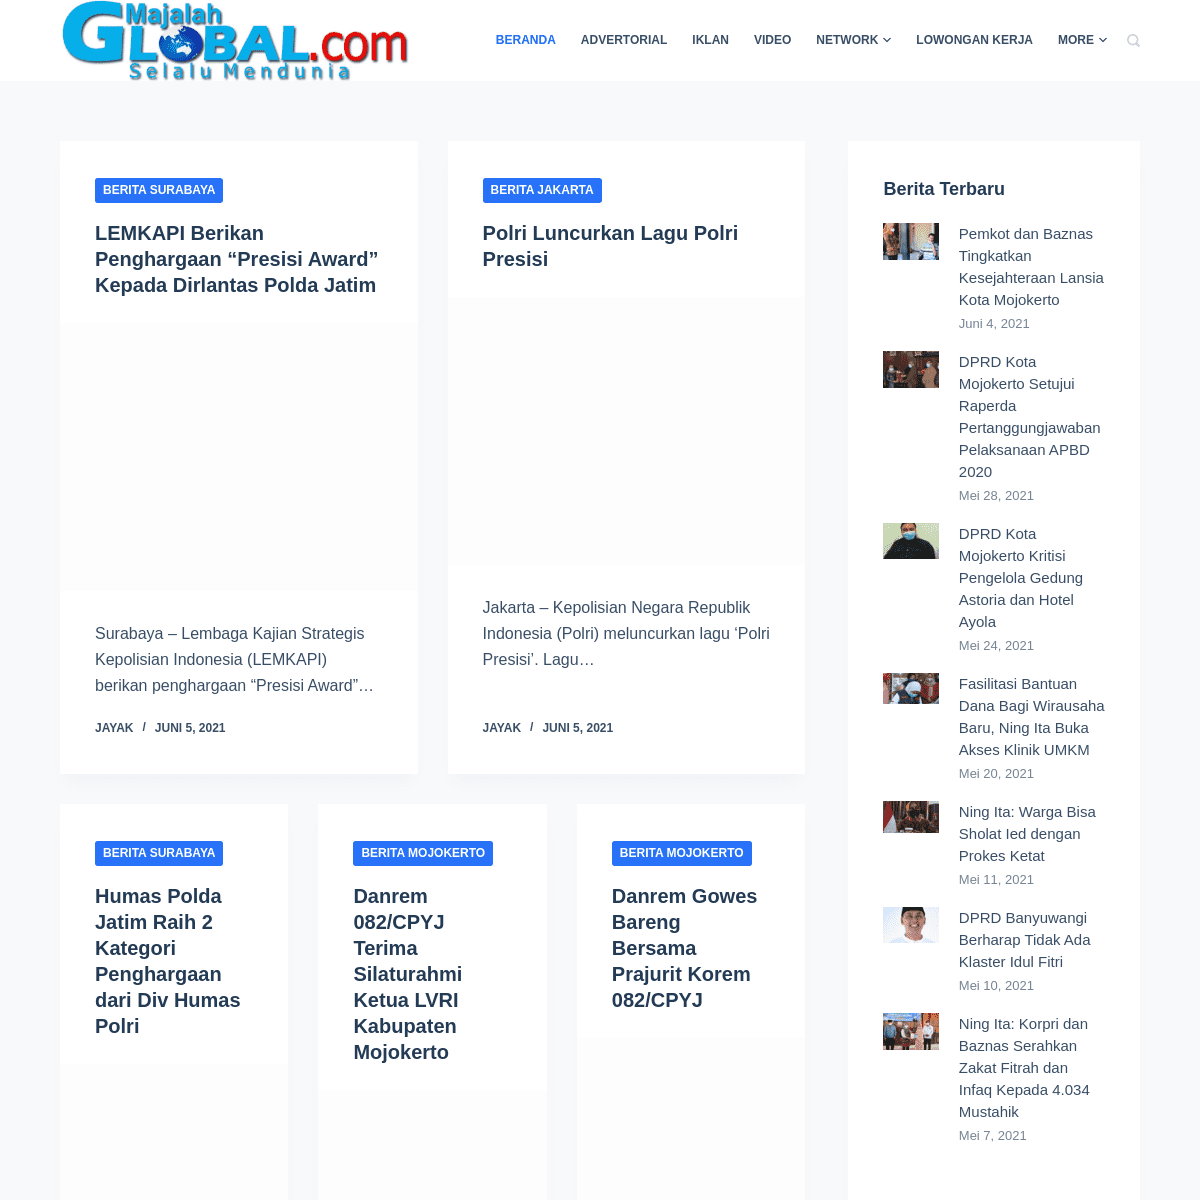 A complete backup of https://majalahglobal.com